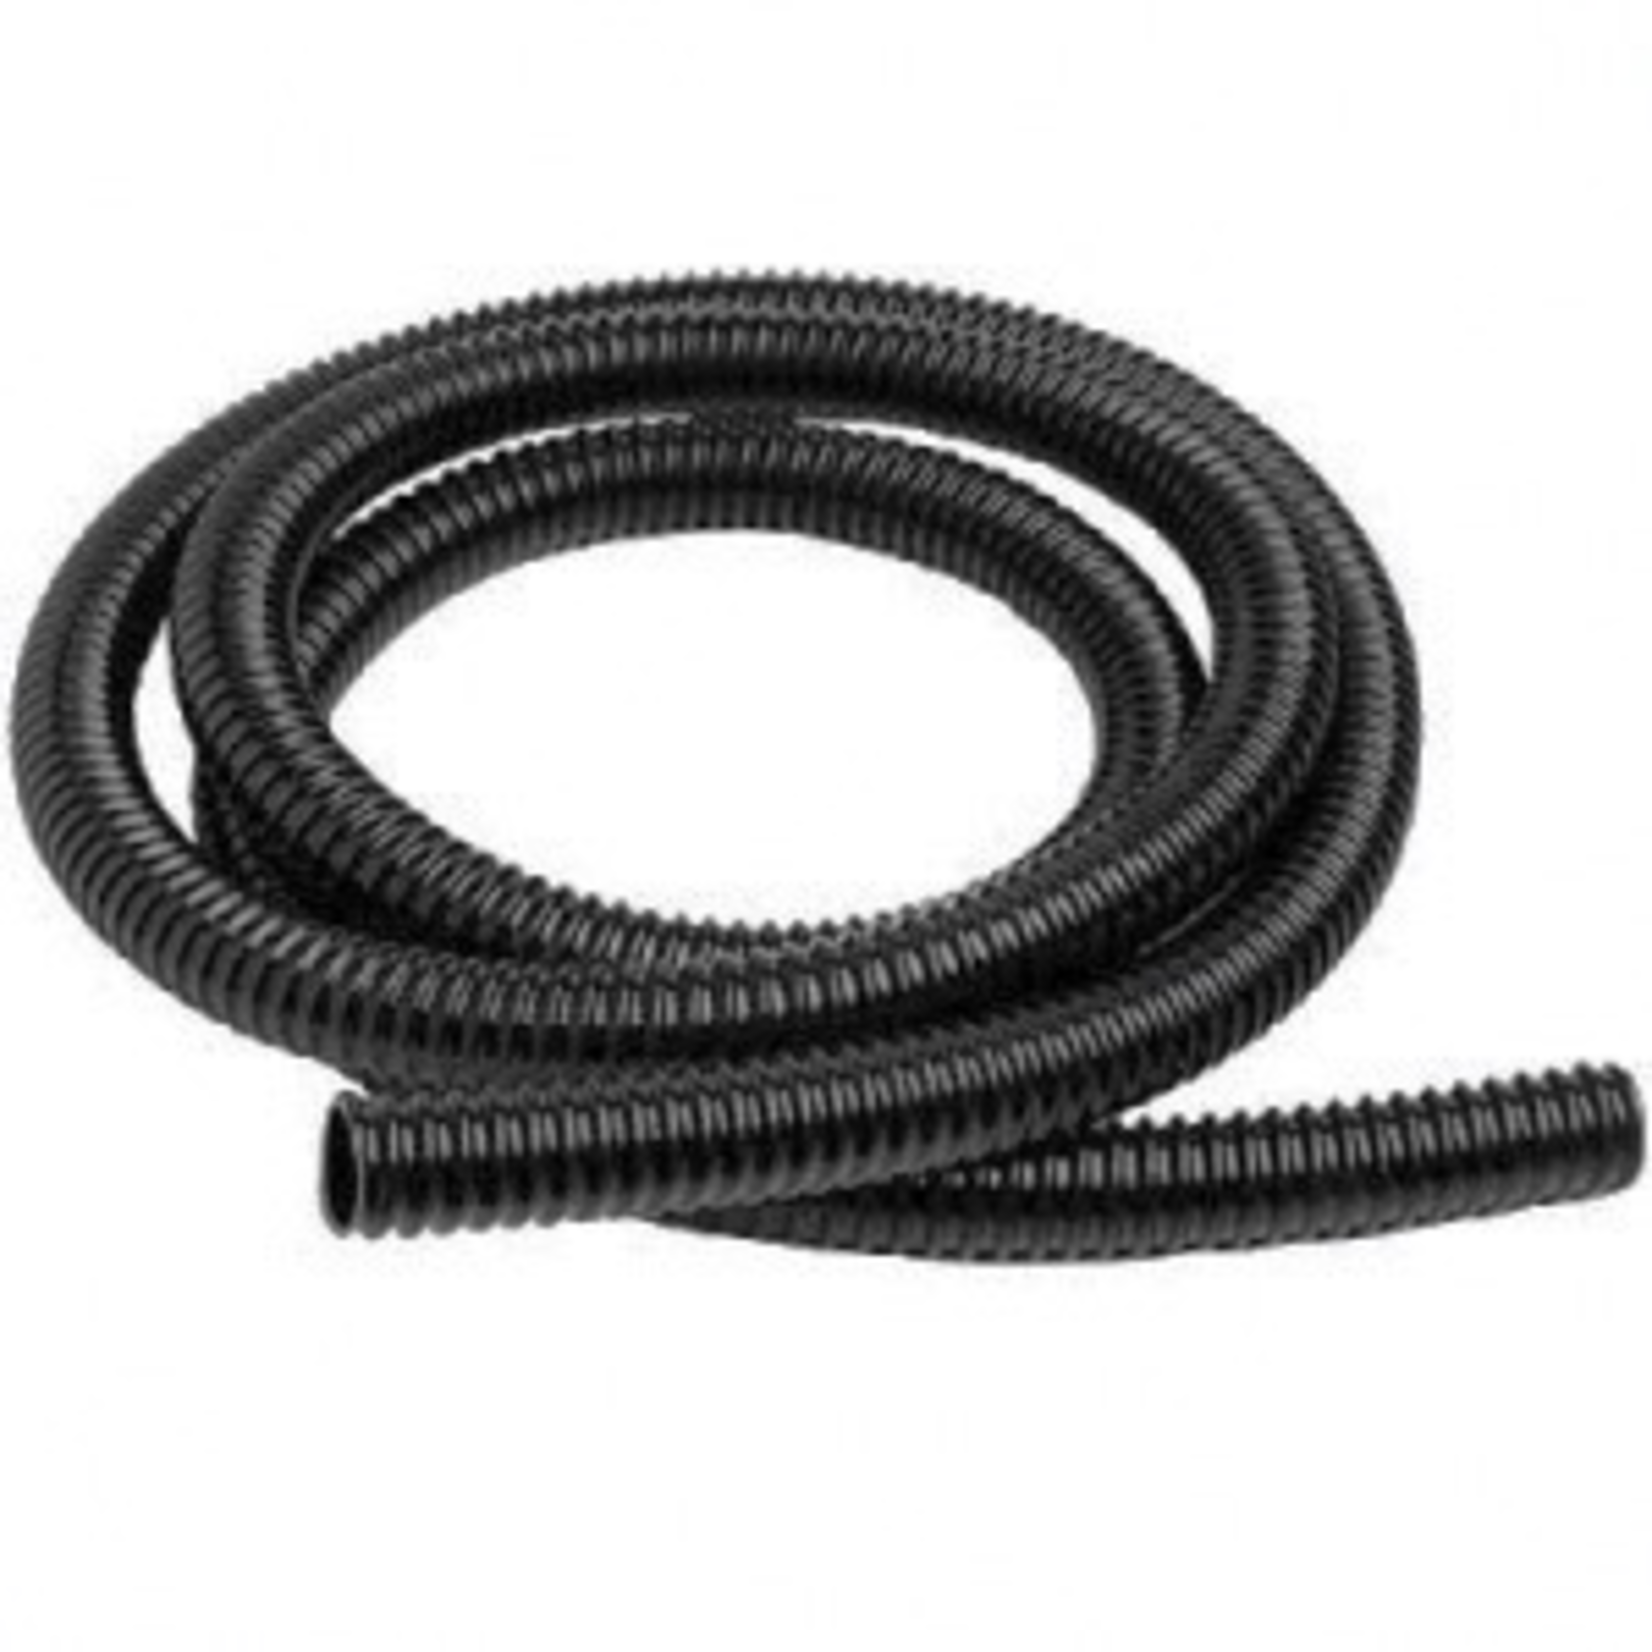 LAGUNA (P) Laguna Non-Kink Tubing  hose - 32 mm (1 ¼") $4.49/ft